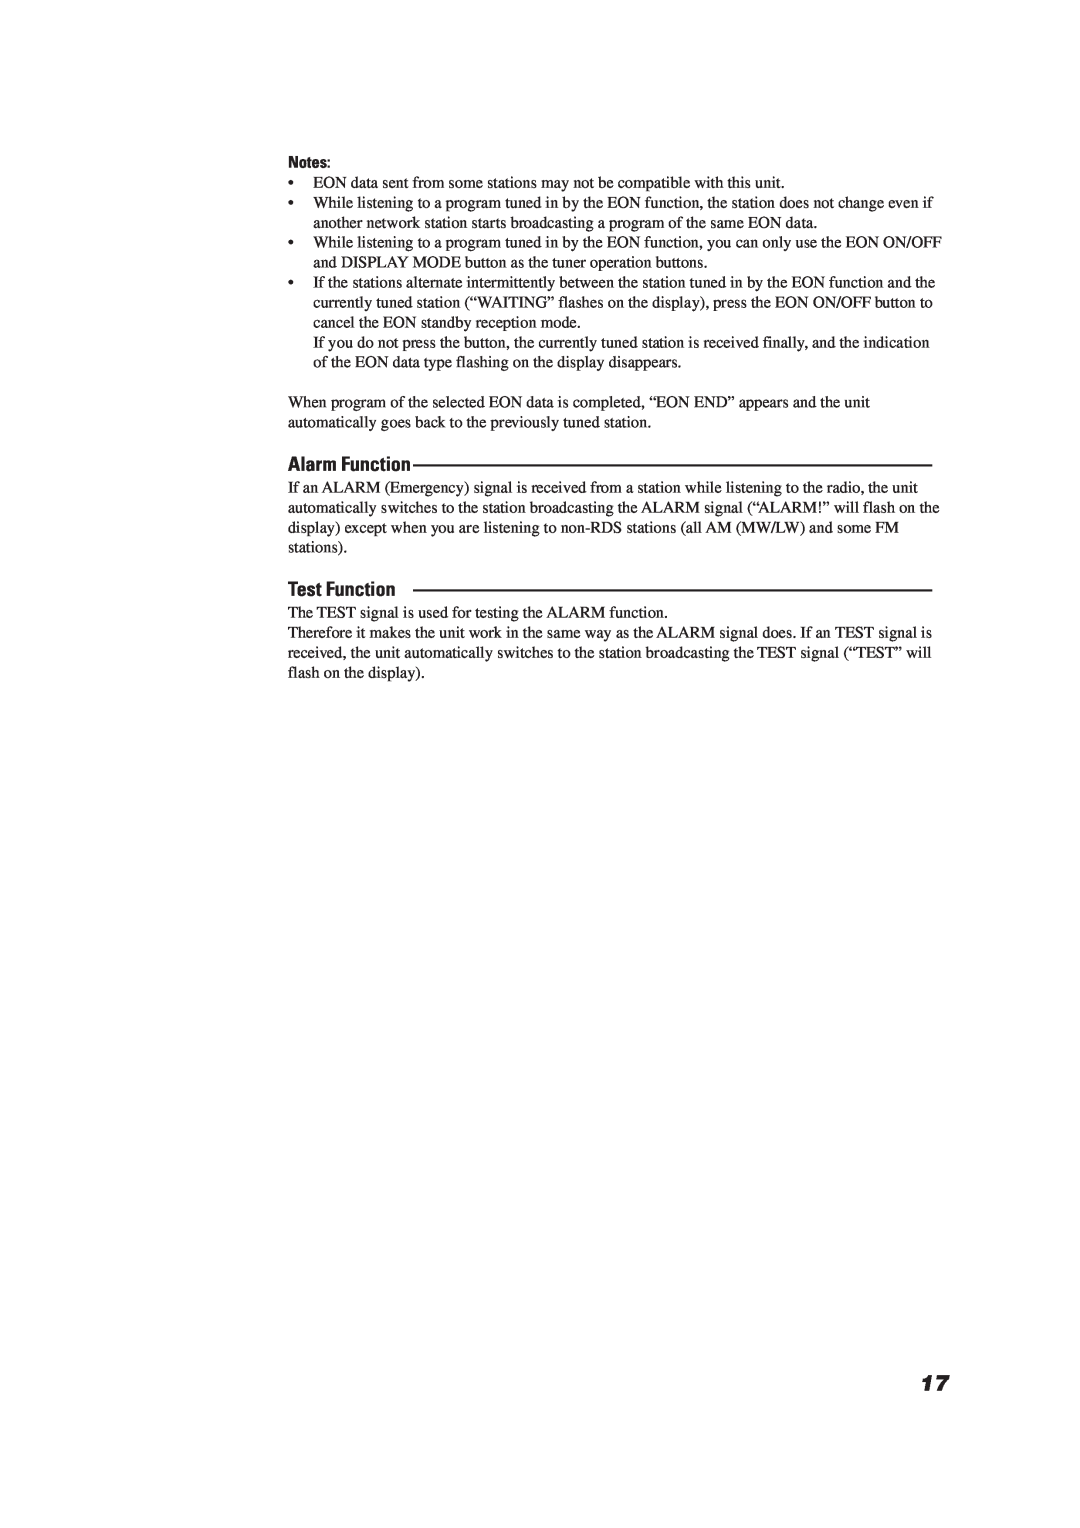 JVC LET0070-002A manual Alarm Function, Test Function 